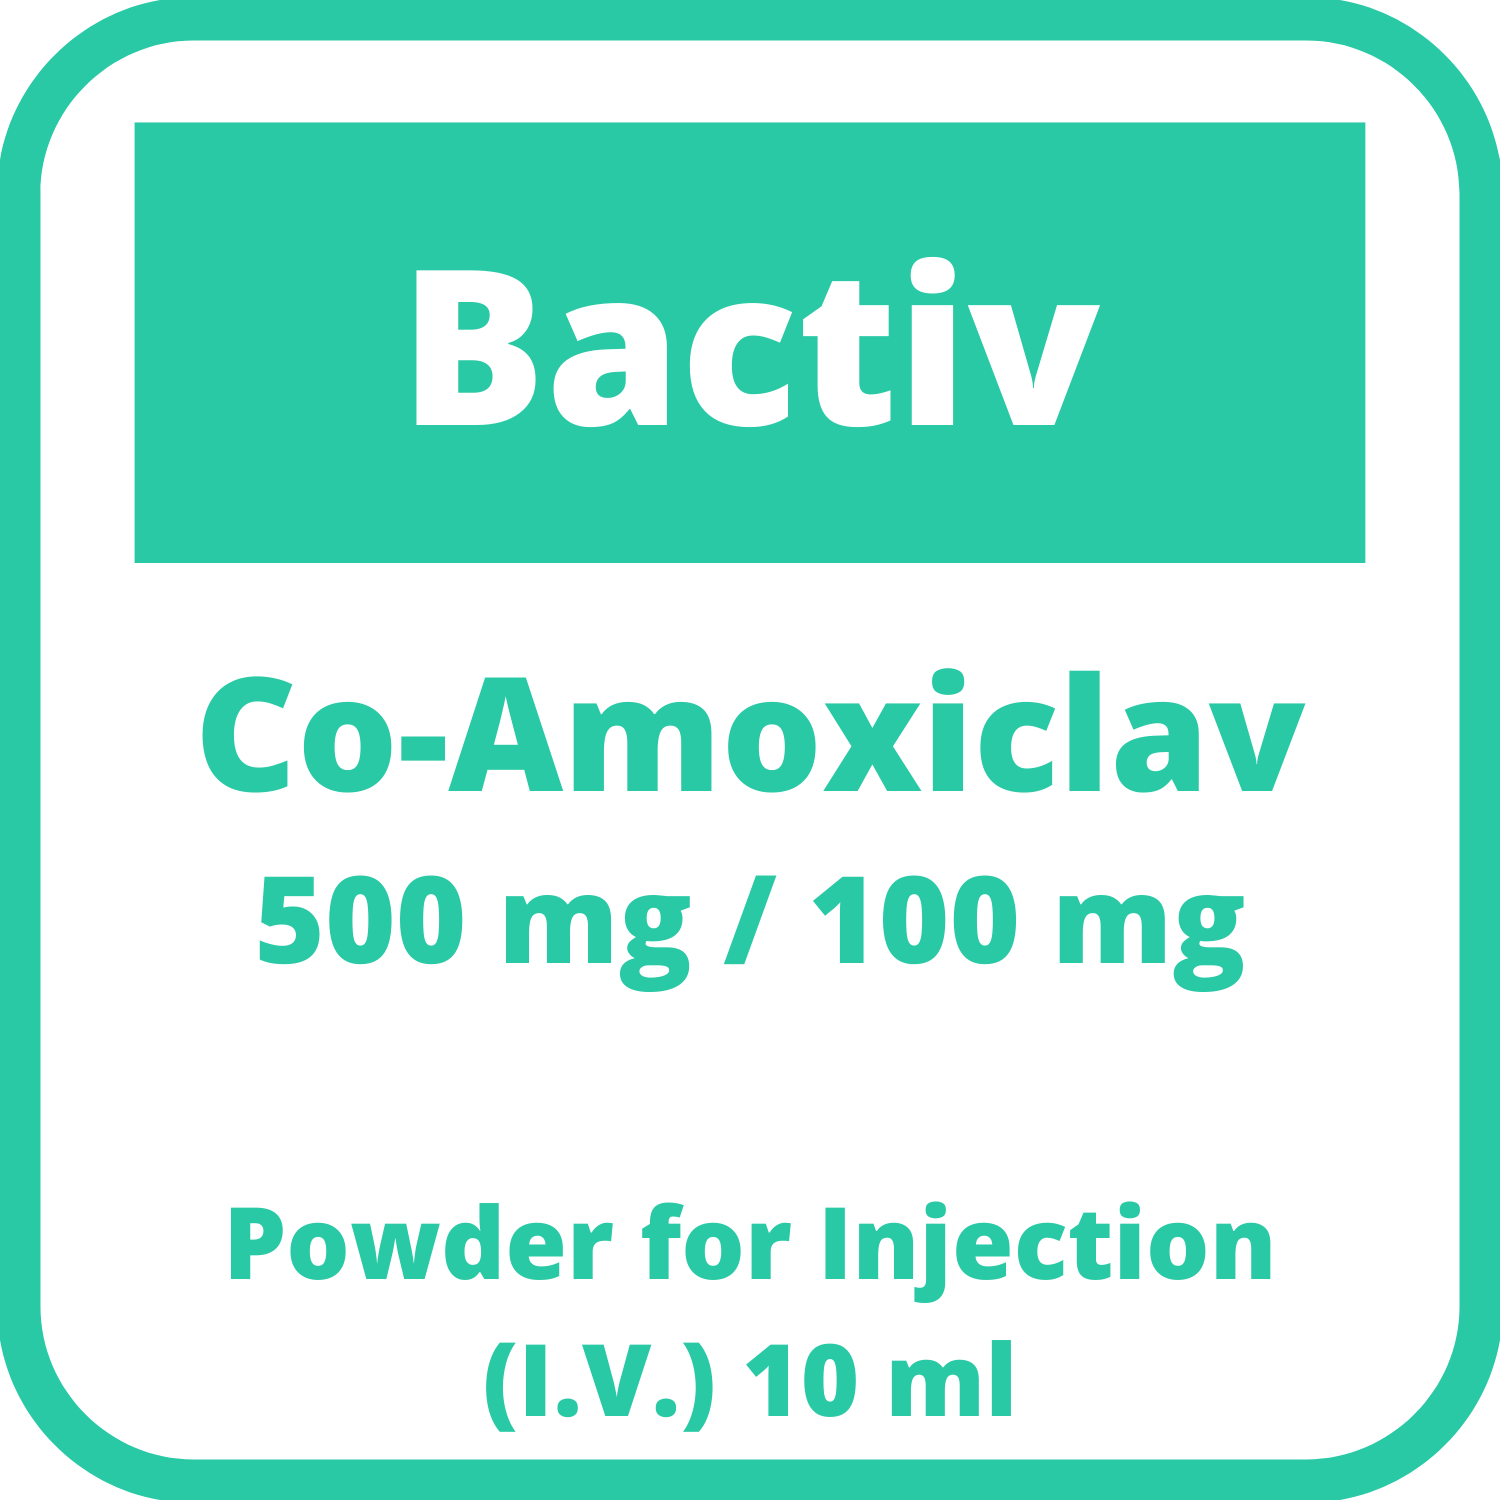 Buy Bactiv co-amoxiclav 500mg / 100mg powder for iv injection 10ml ...